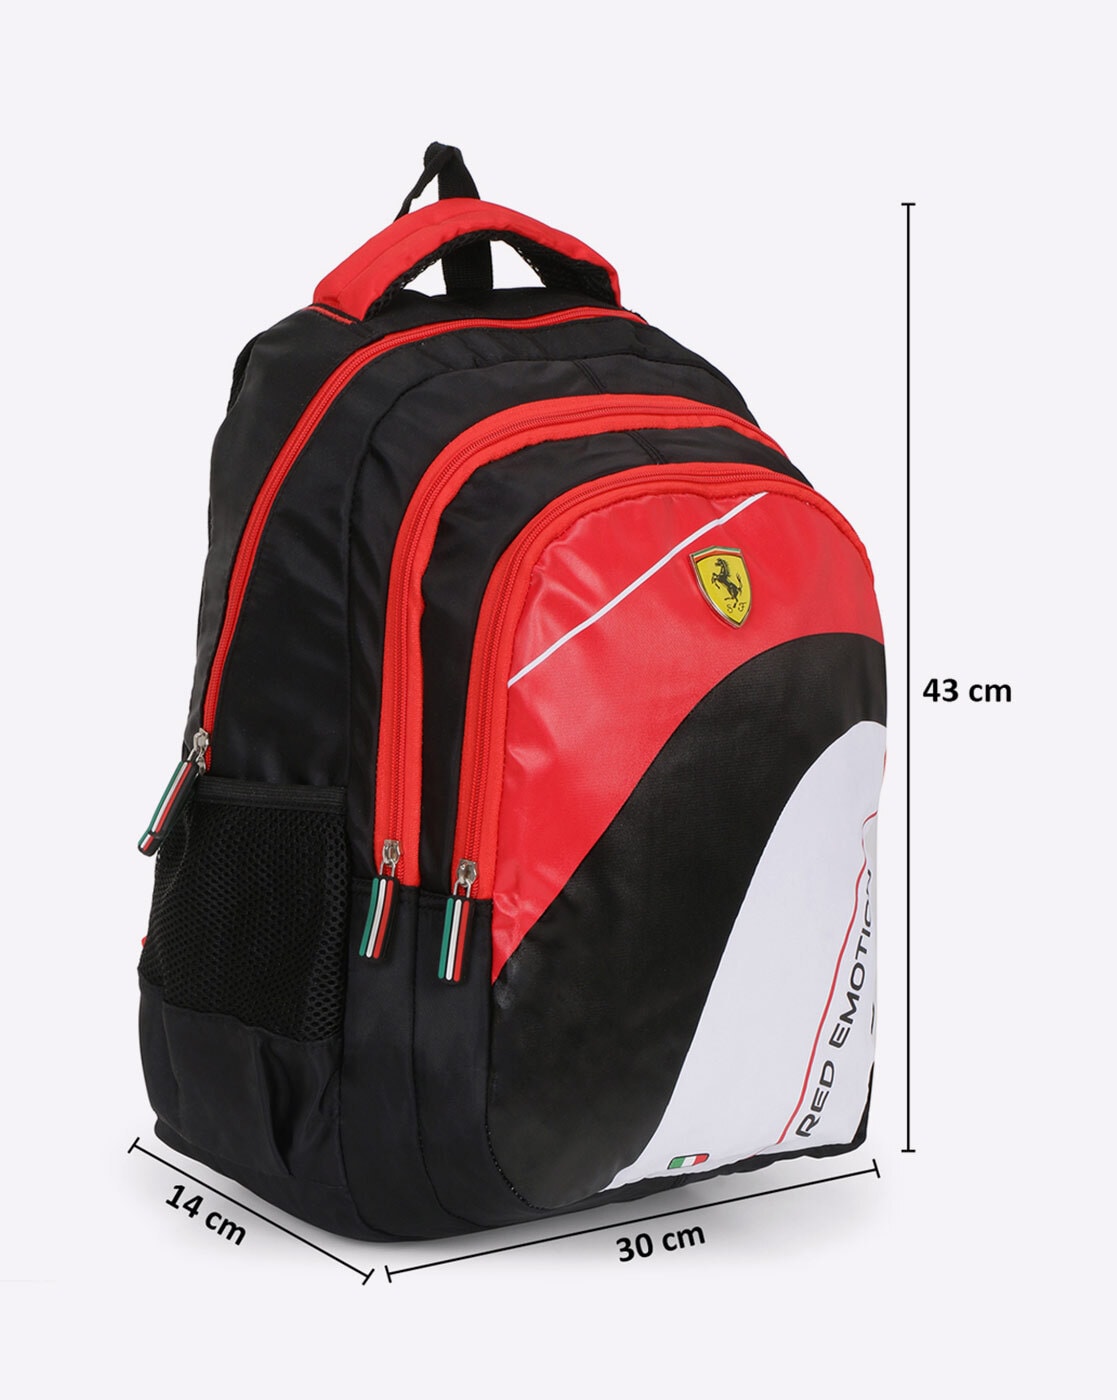 Buy Puma Scuderia Ferrari Unisex Latest 17 L Backpack (Multicolor) at  Amazon.in